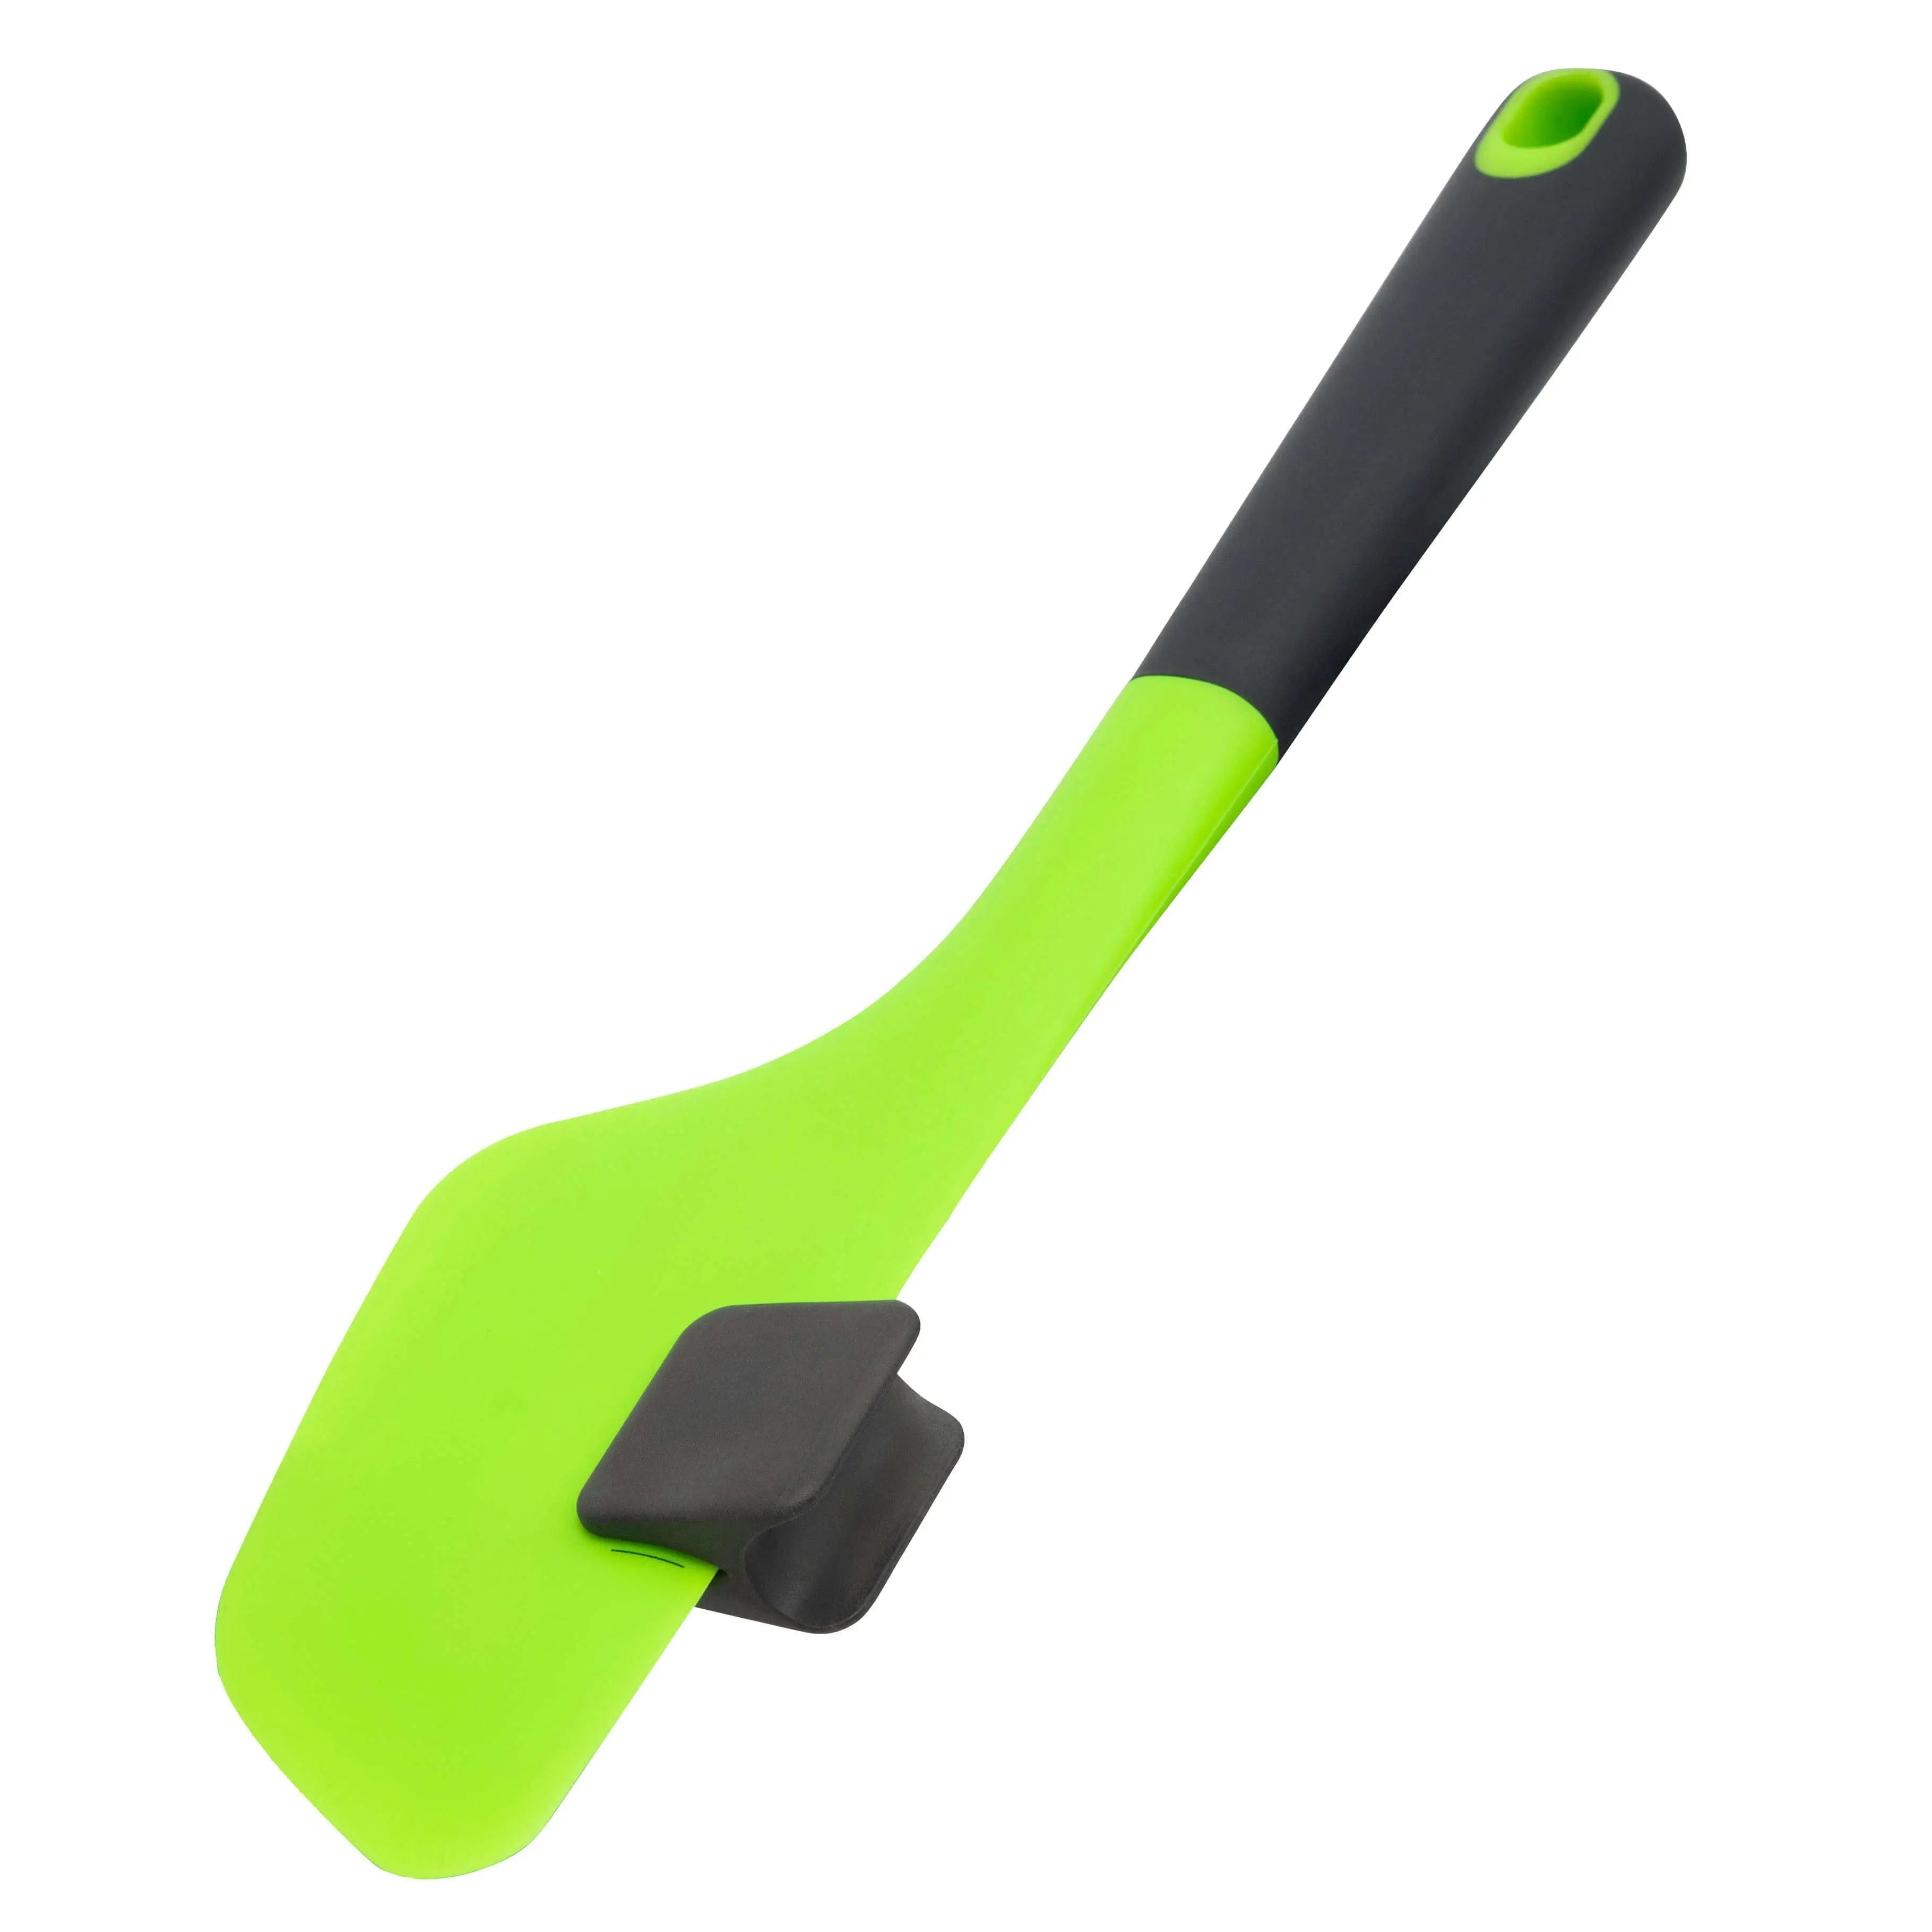 KochFix rotary spatula for Thermomix TM6 / TM5 / TM31